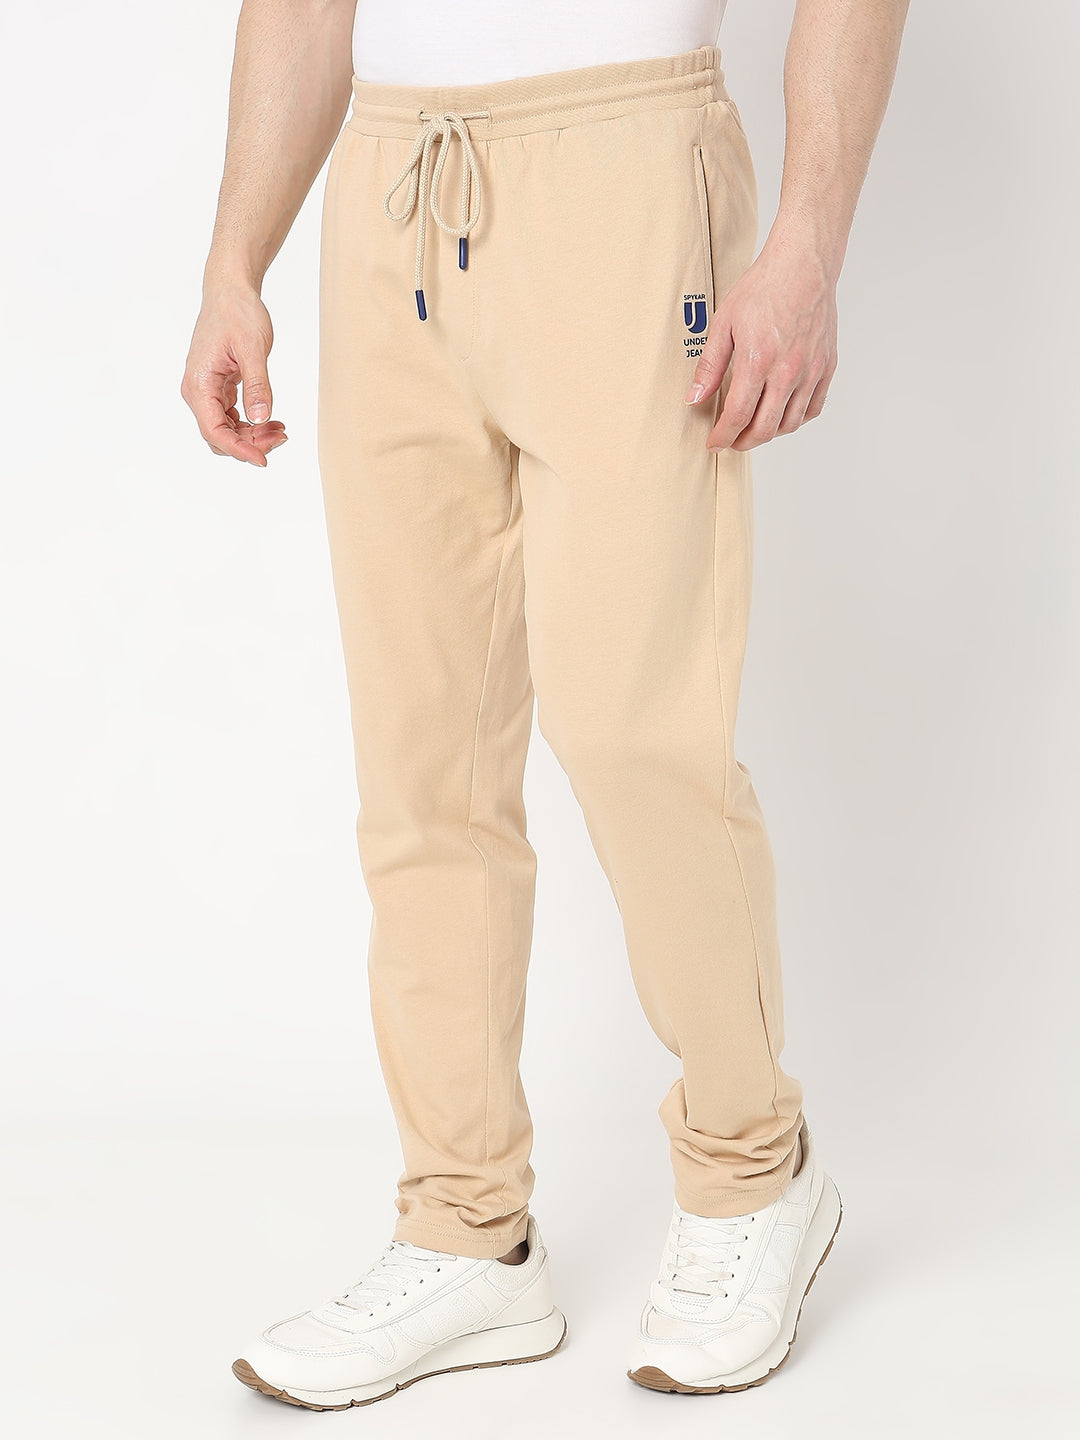 Underjeans by Spykar Men Premium Knitted Beige Pyjama